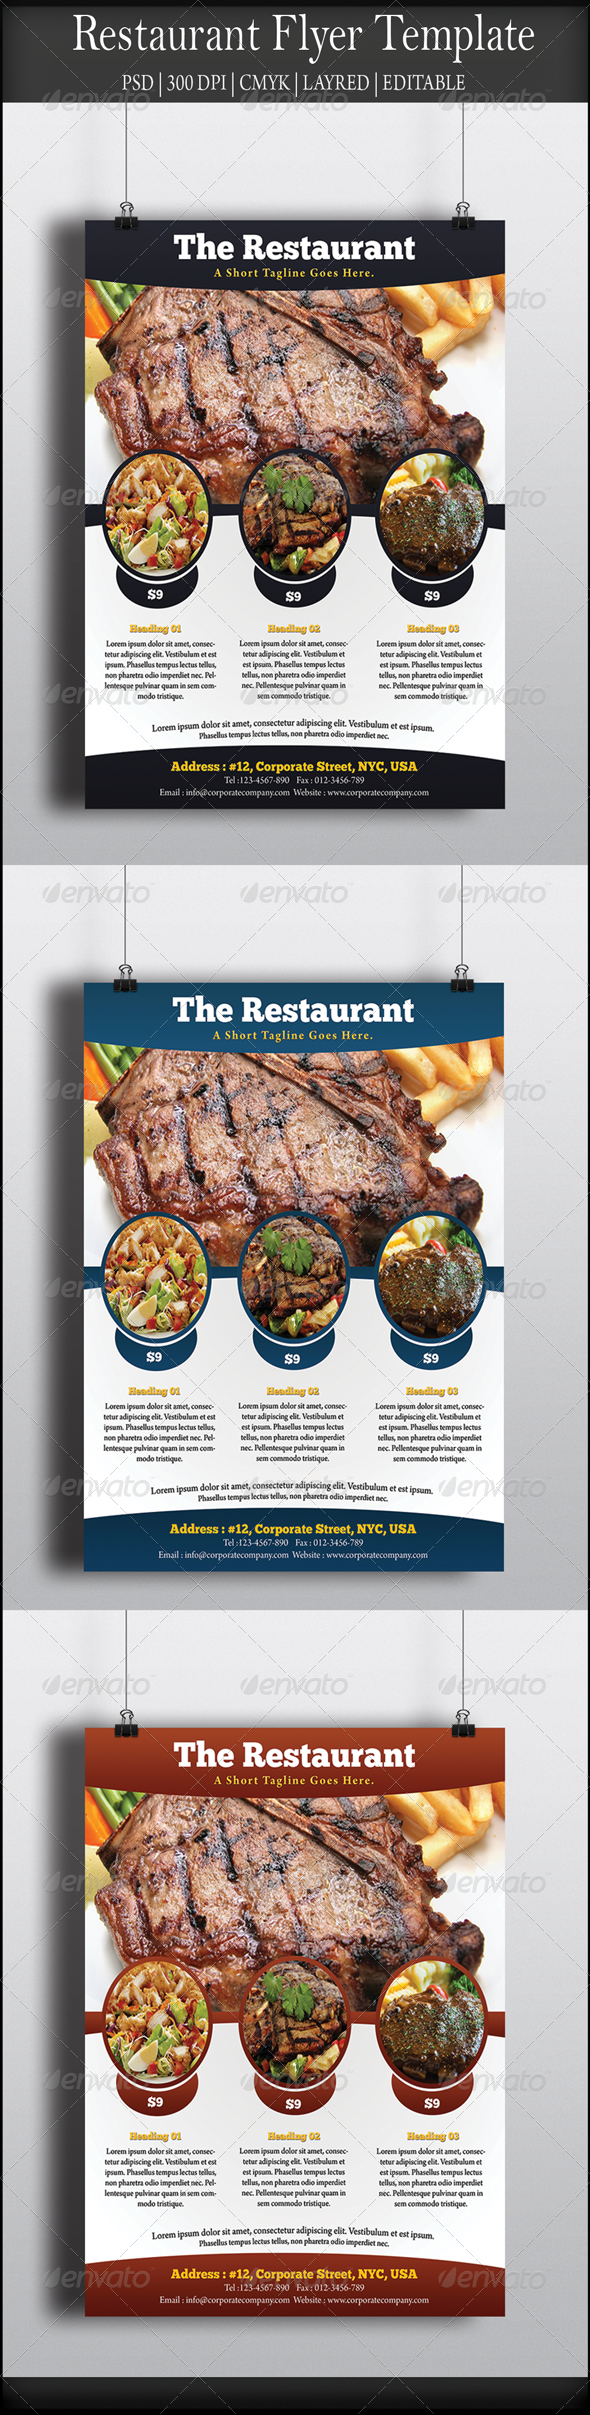 Restaurant flyer image